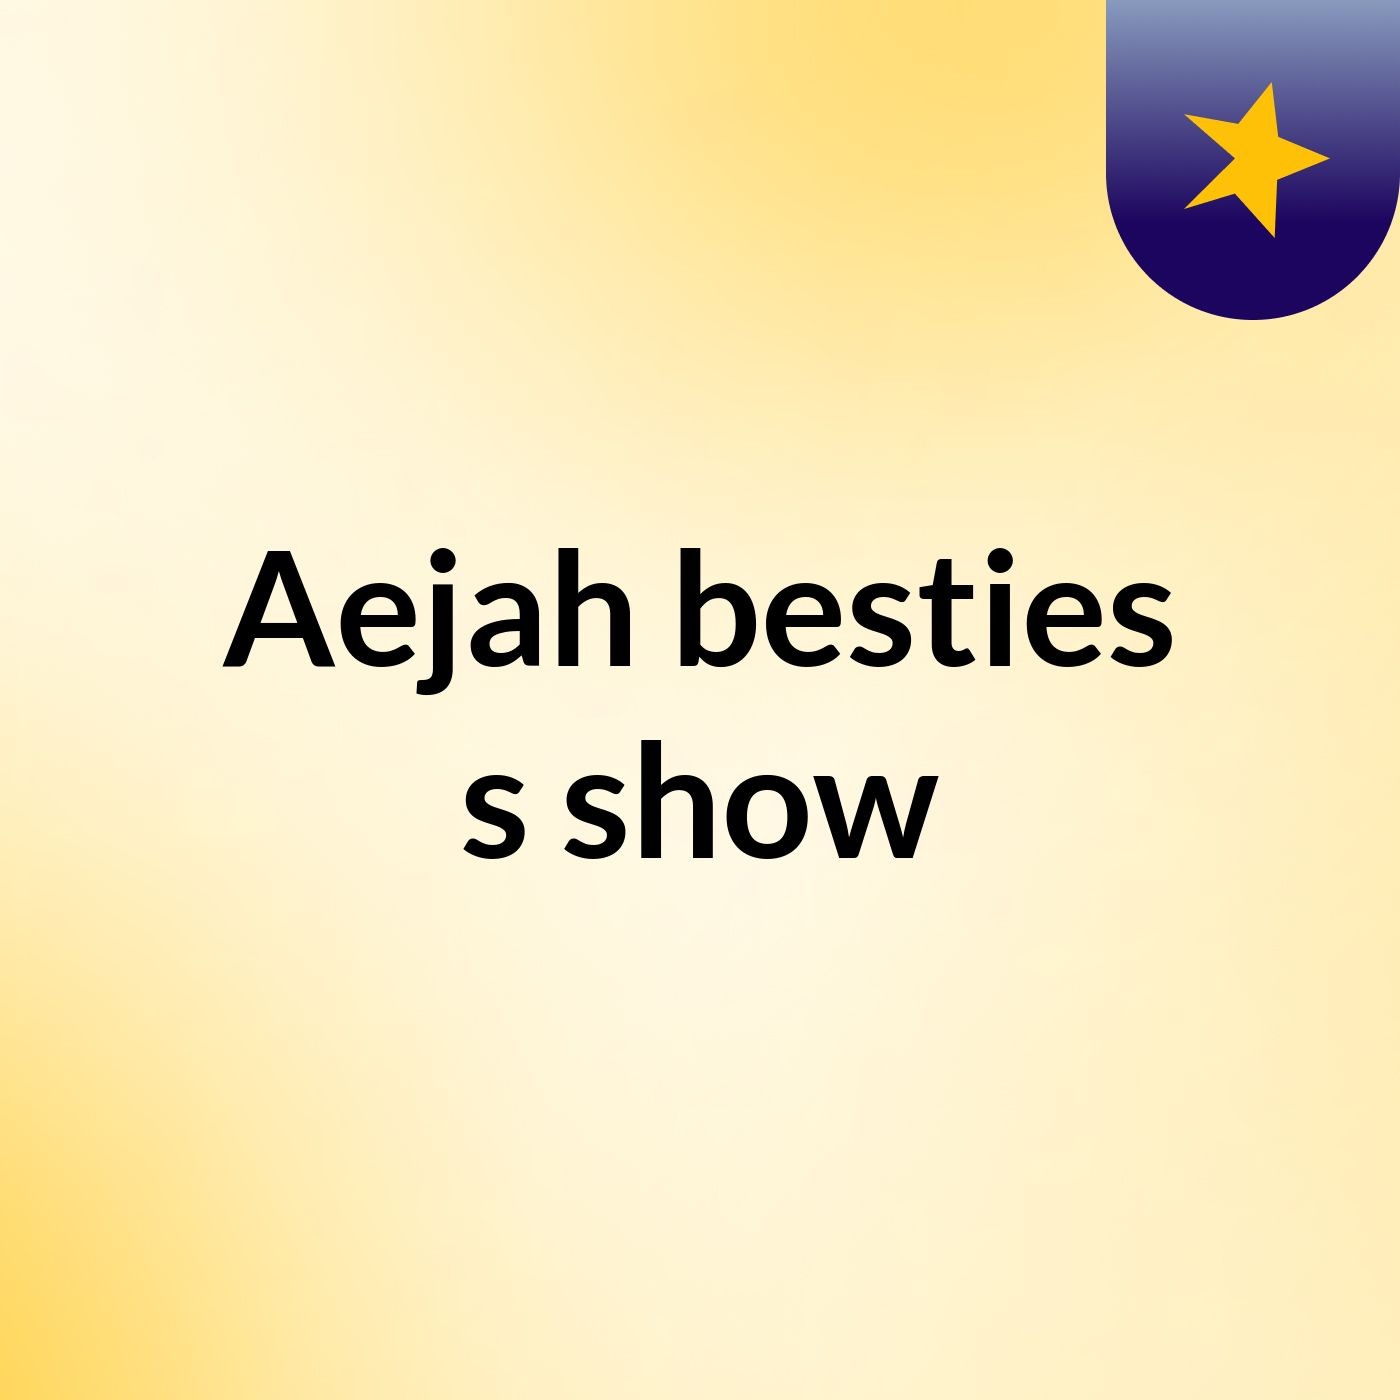 Aejah besties's show